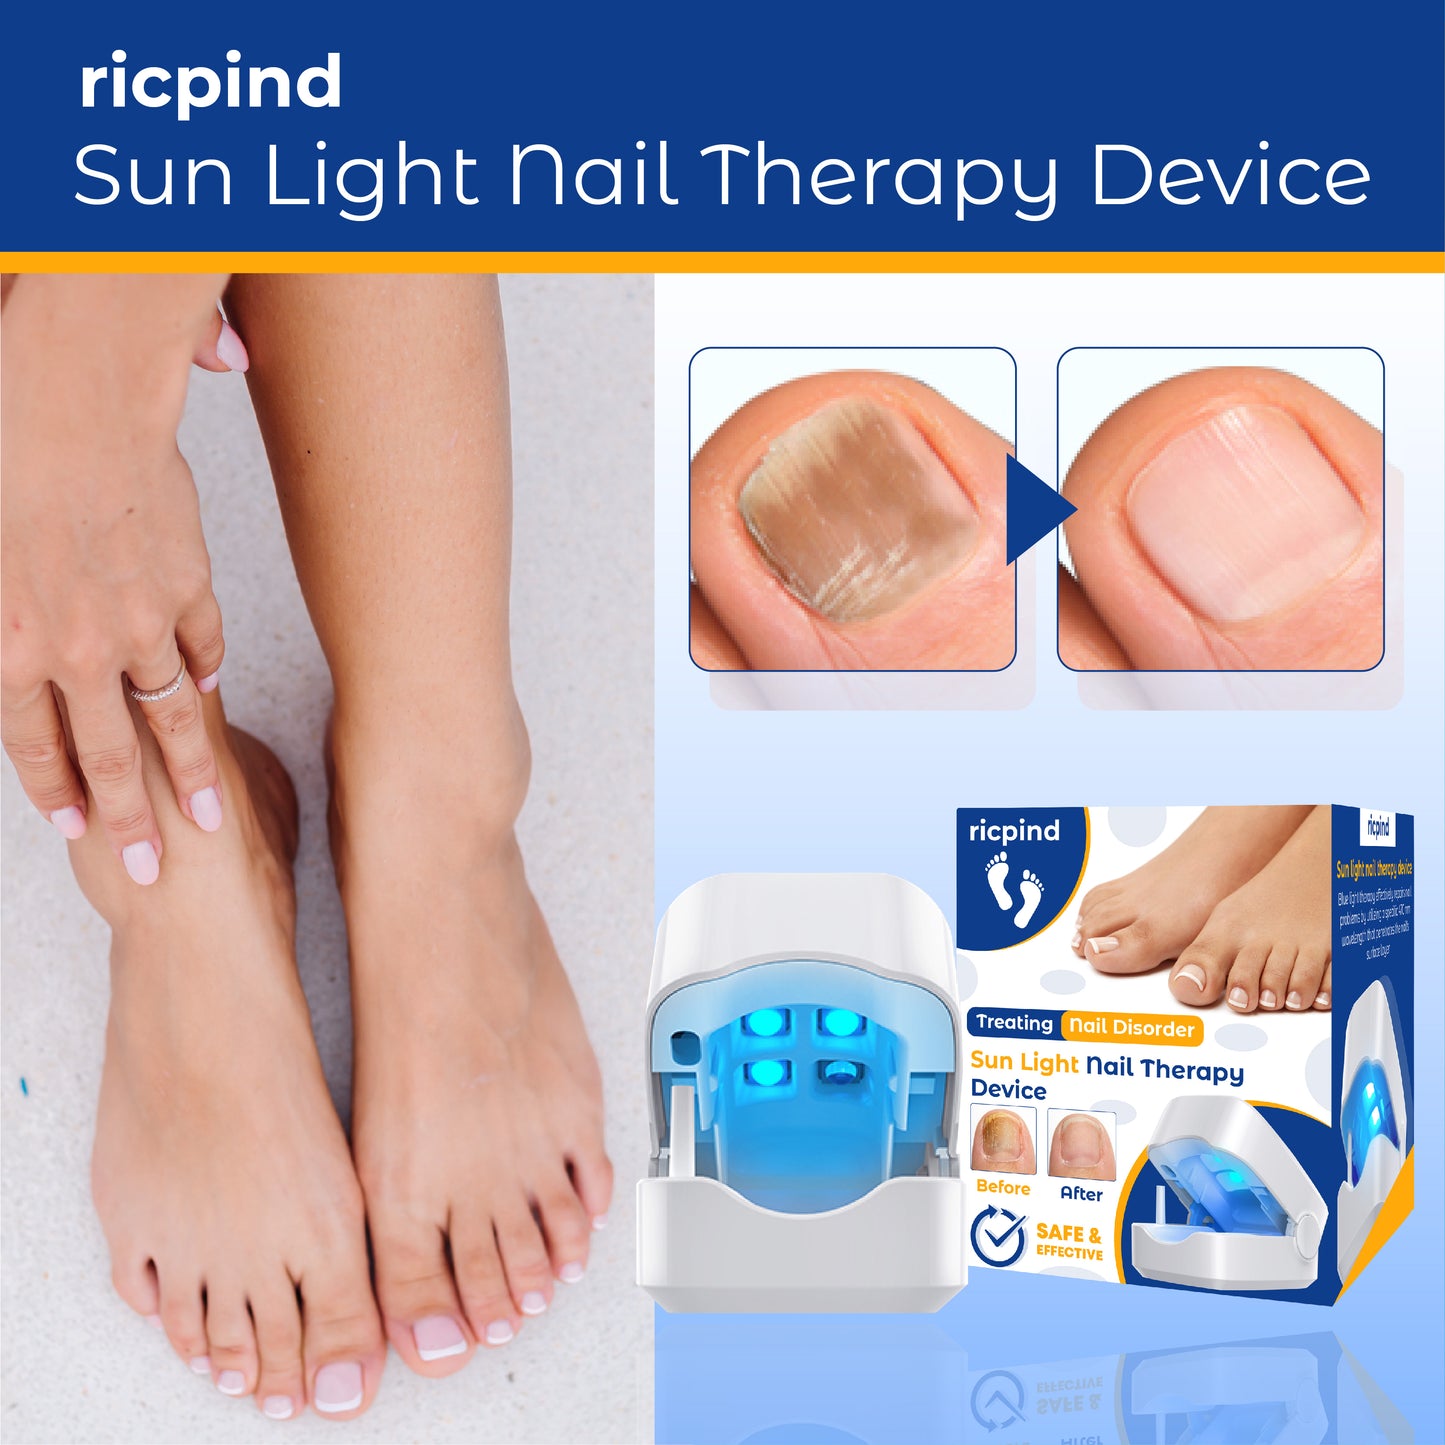 RICPIND Sun Light NailTherapy Device